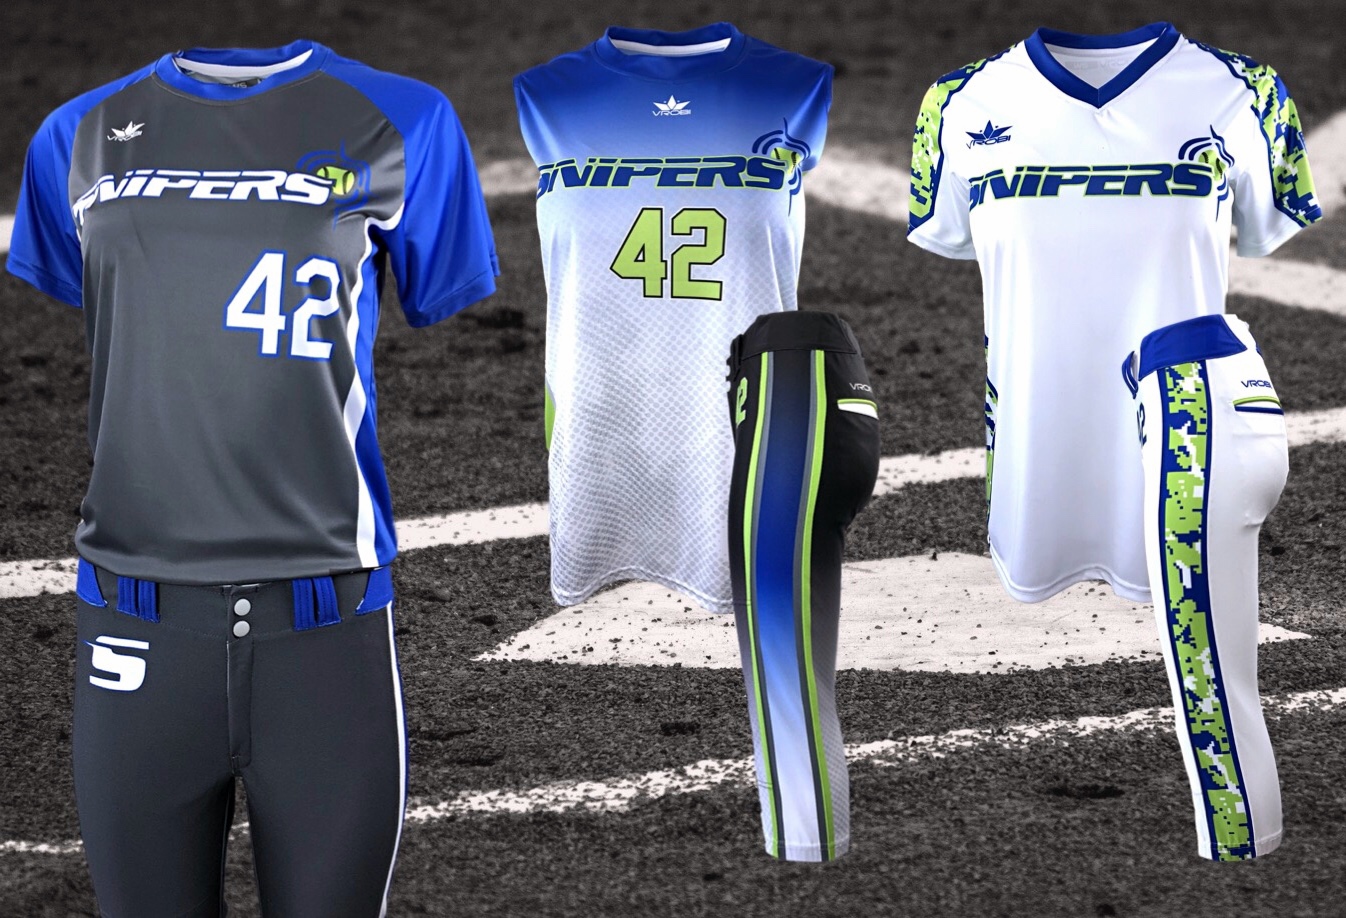 Sublimated Softball Uniforms